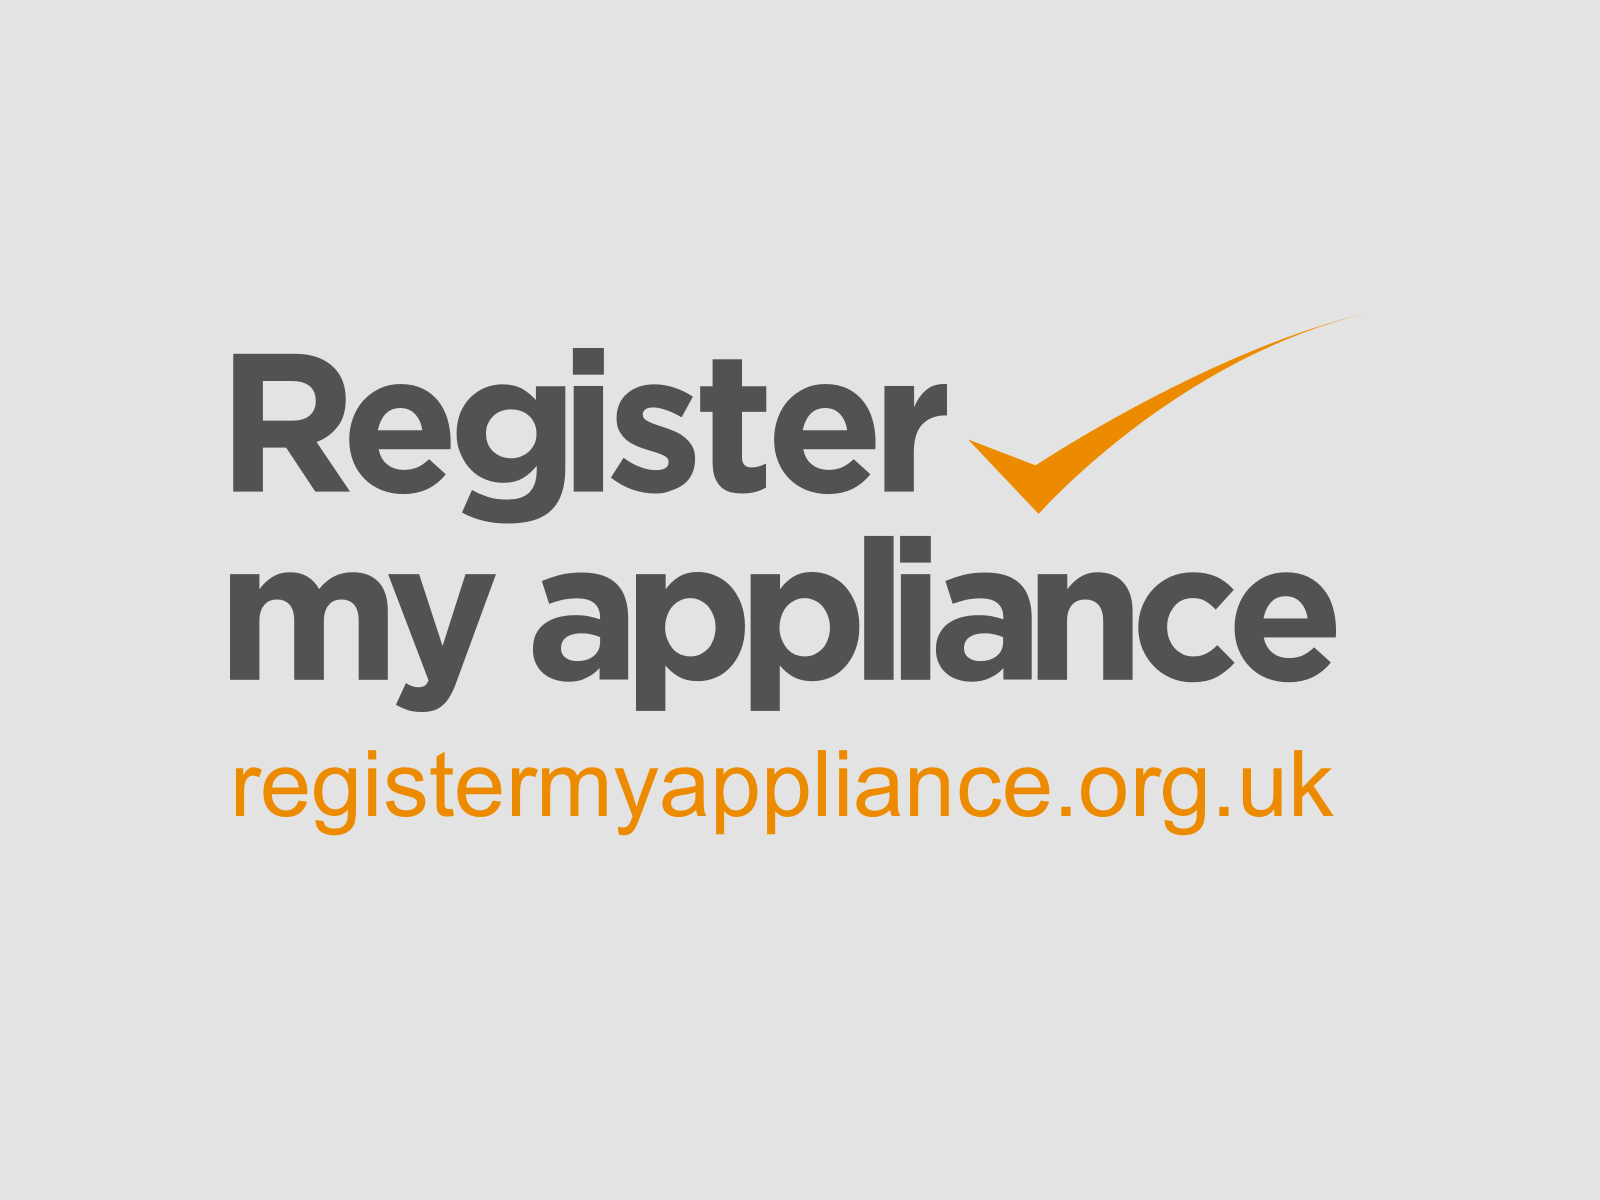 Register my appliance - registermyappliance.org.uk